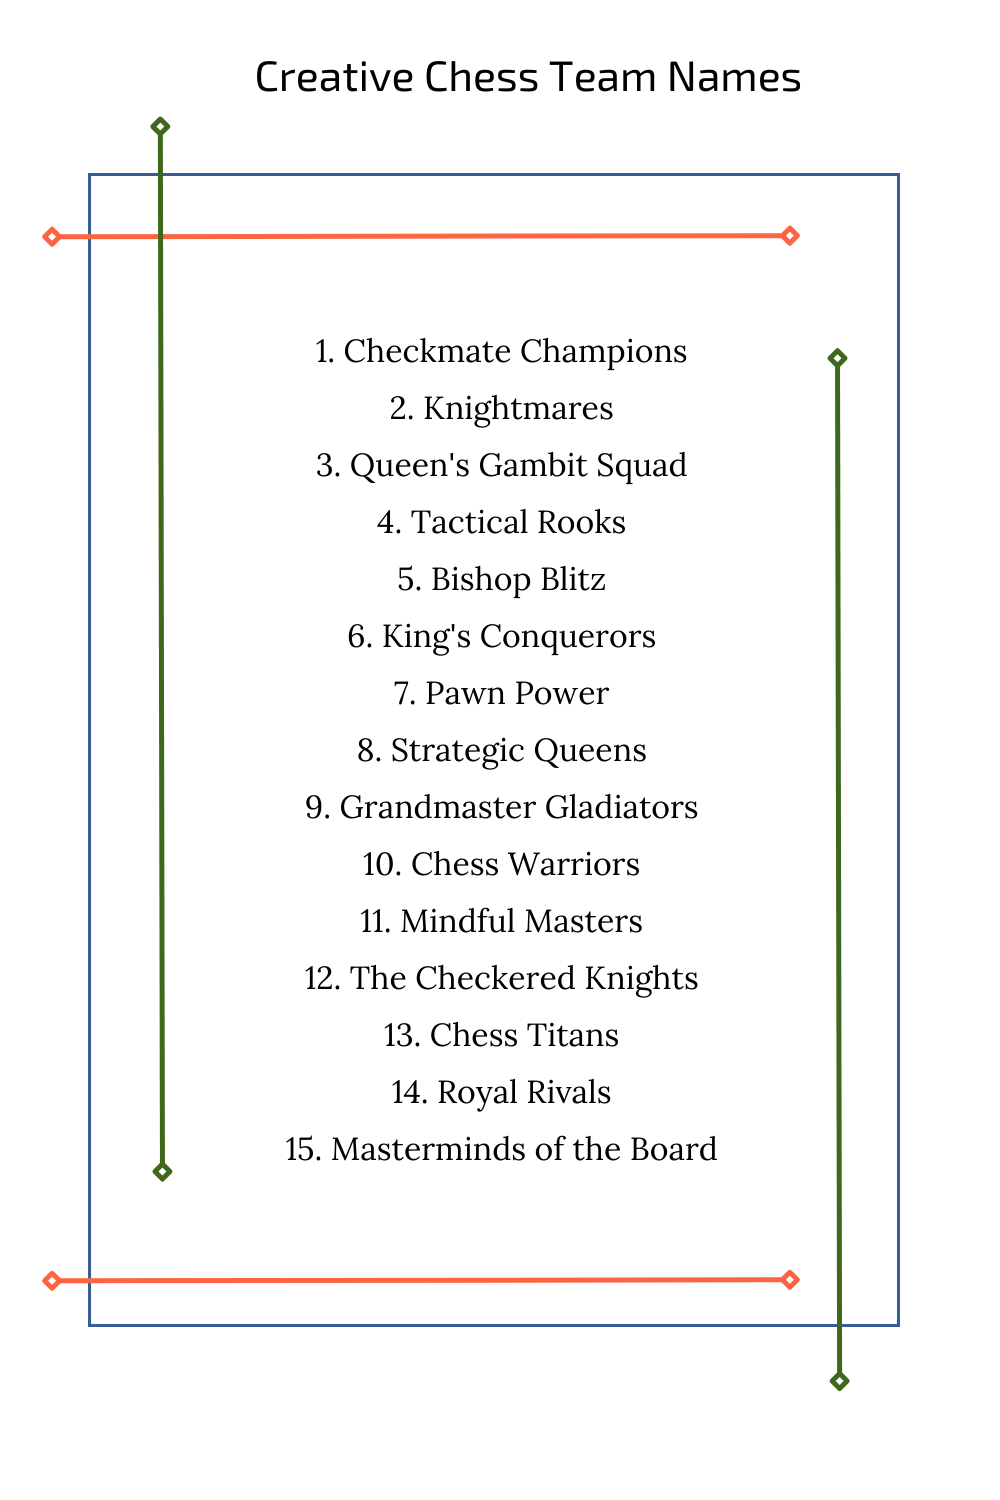 Creative Chess Team Names